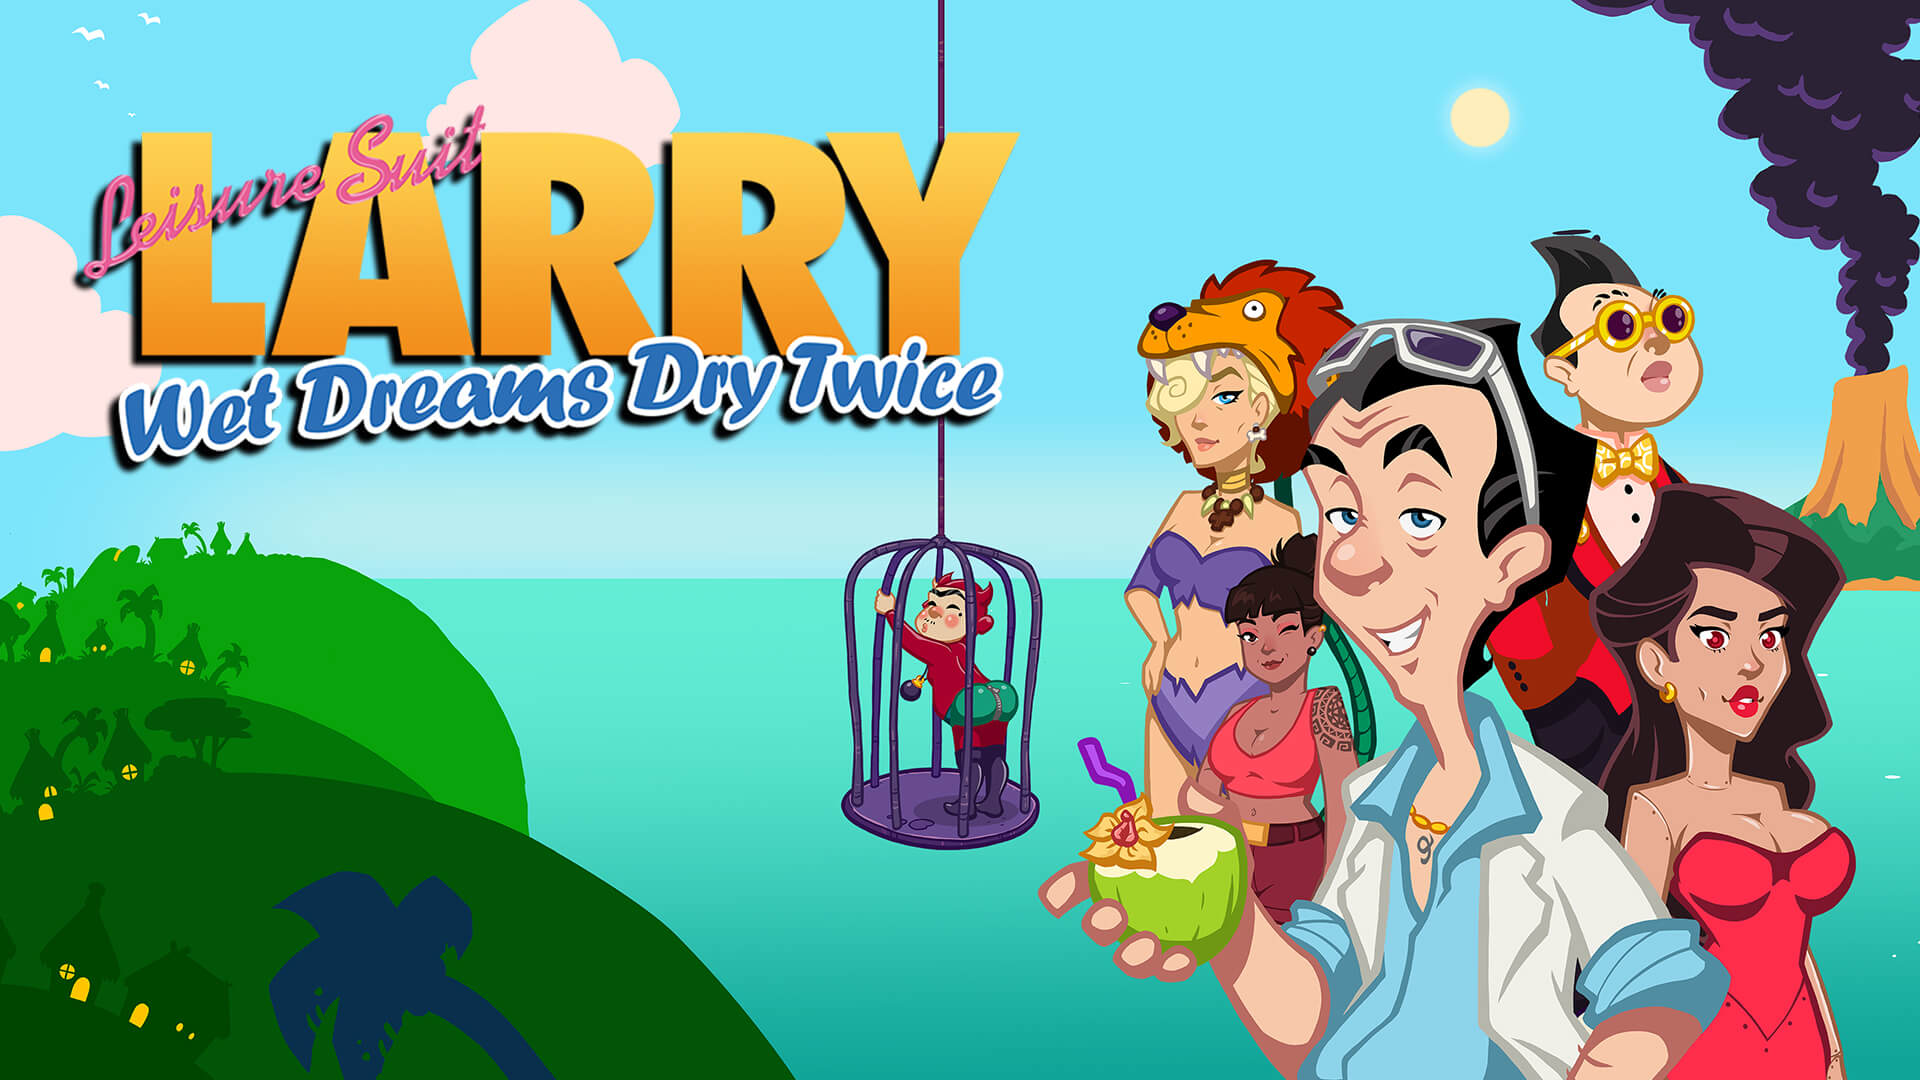 Приключения Ларри. Leisure Suit Larry - wet Dreams Dry twice. Игра похождения Ларри. (Ps4) Leisure Suit Larry: wet Dreams Dry twice (н).